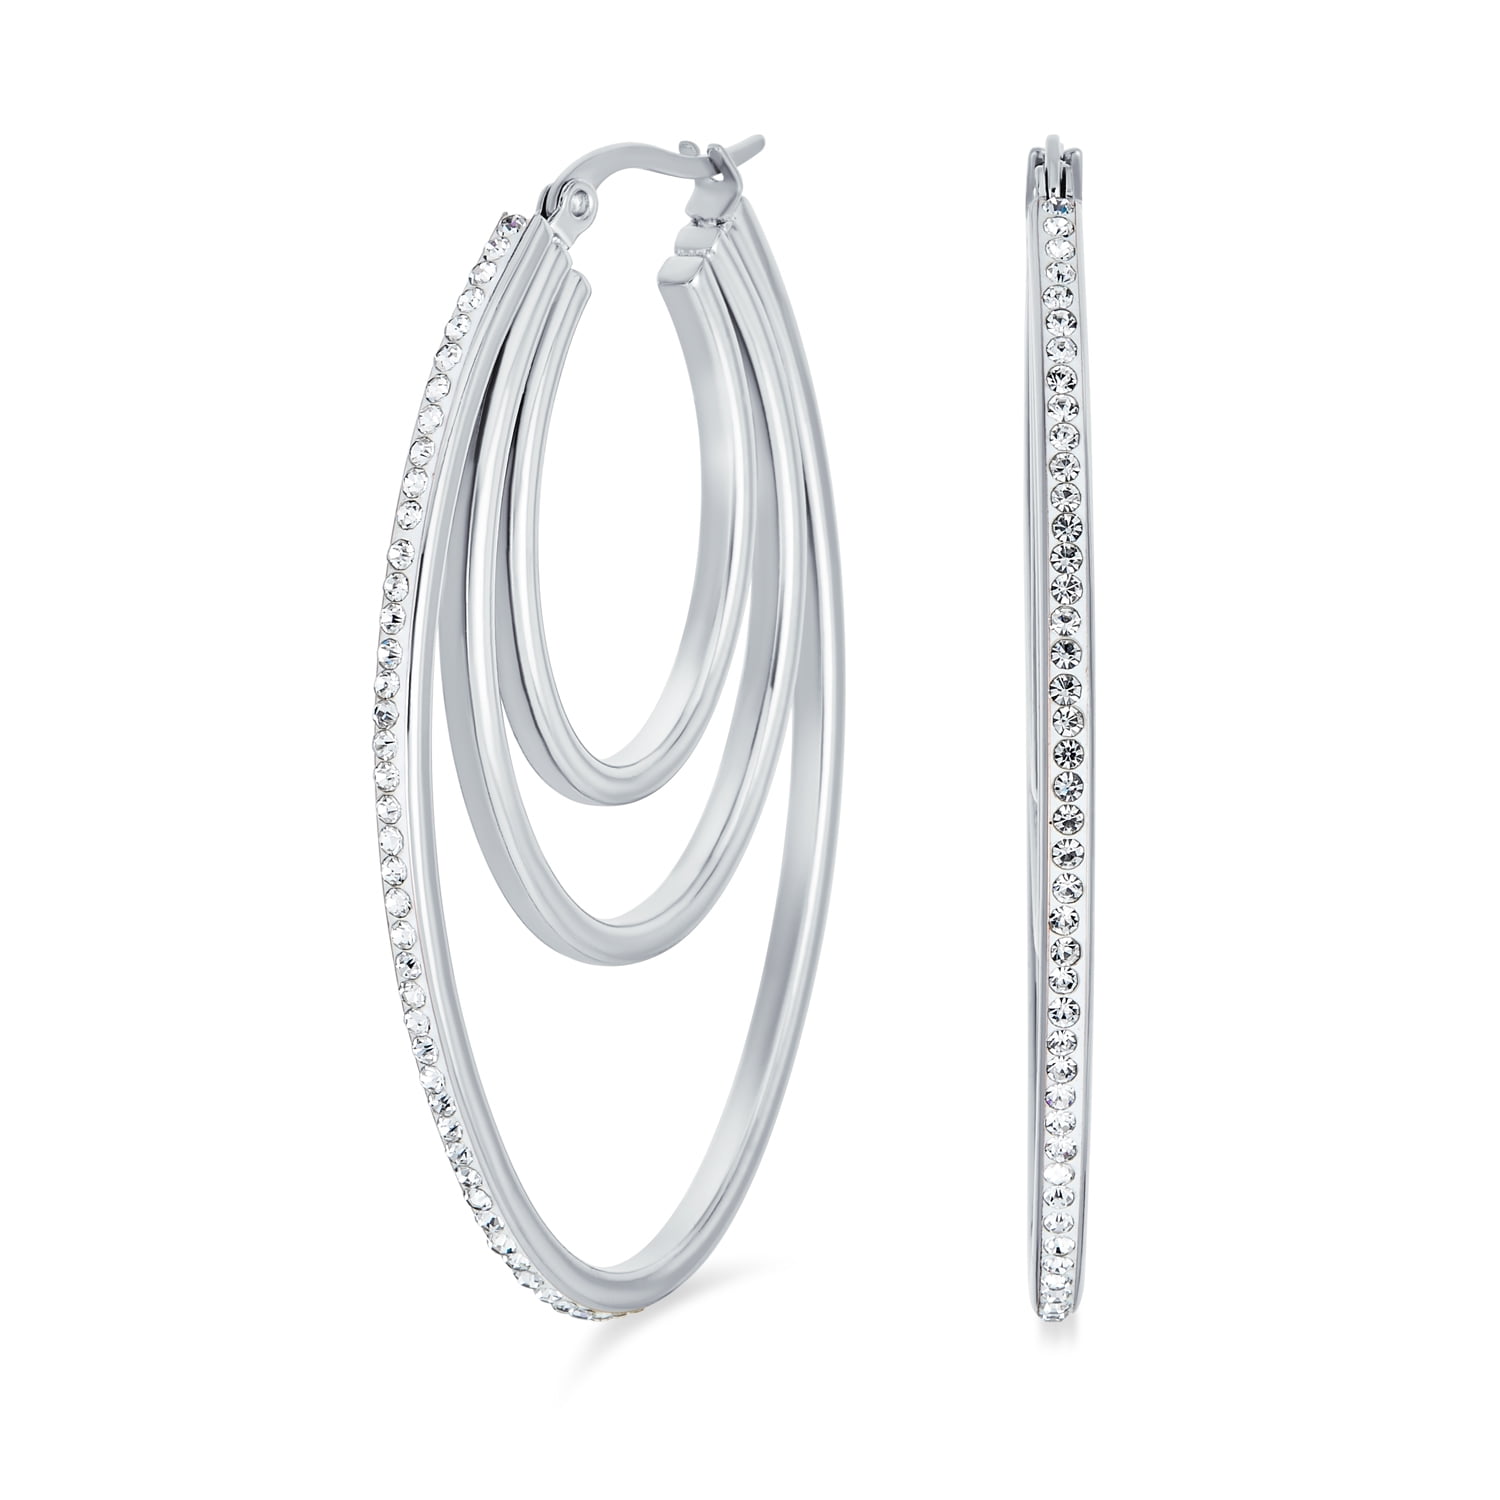 Stainless Steel 2-tone Hoop Earrings Fashion Jewellery